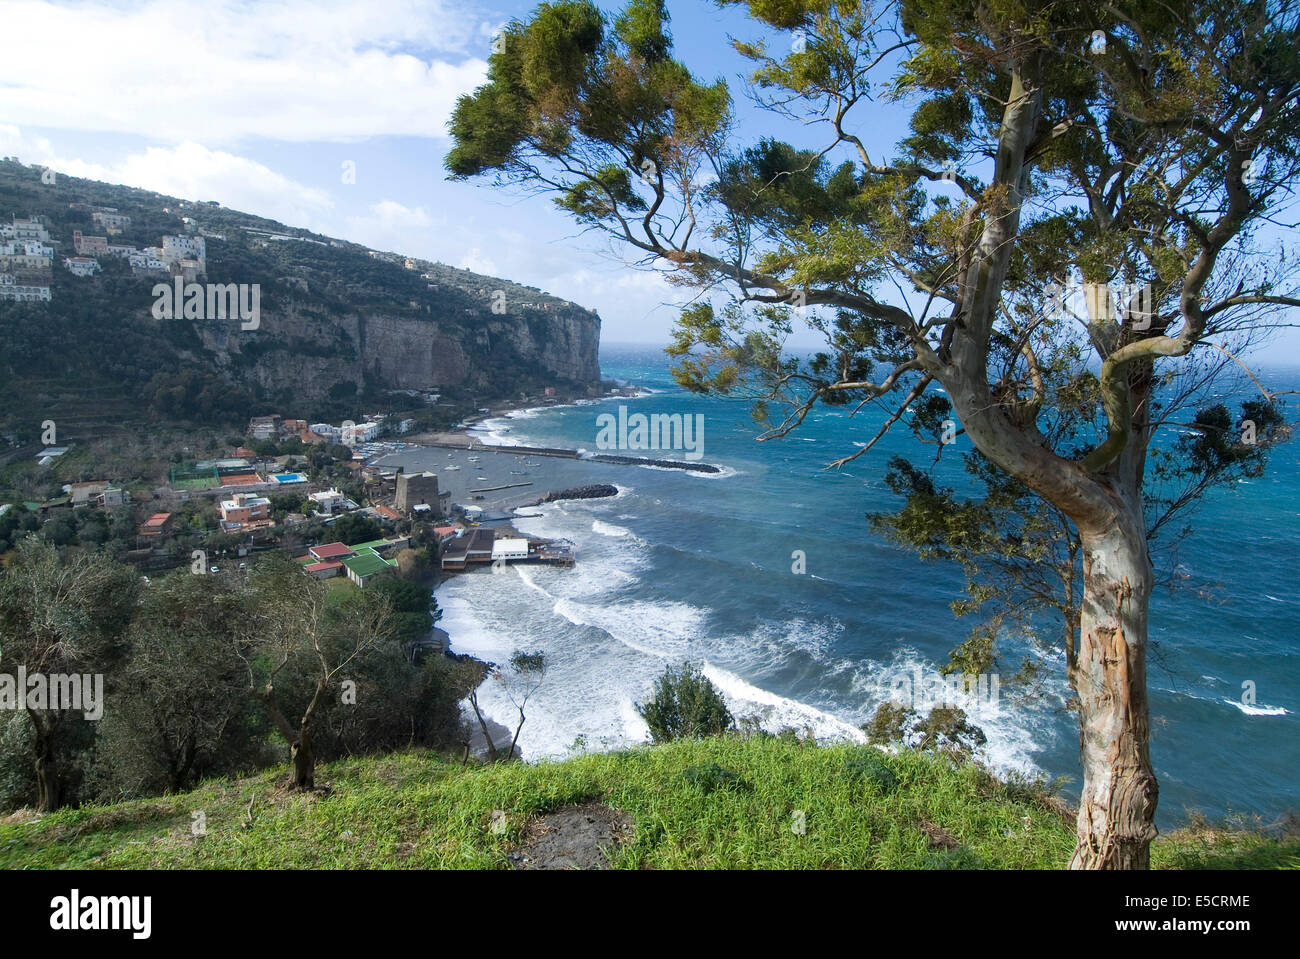 View of Seiano and Mediterranean coast, near Sorrento, Italy Stock Photo